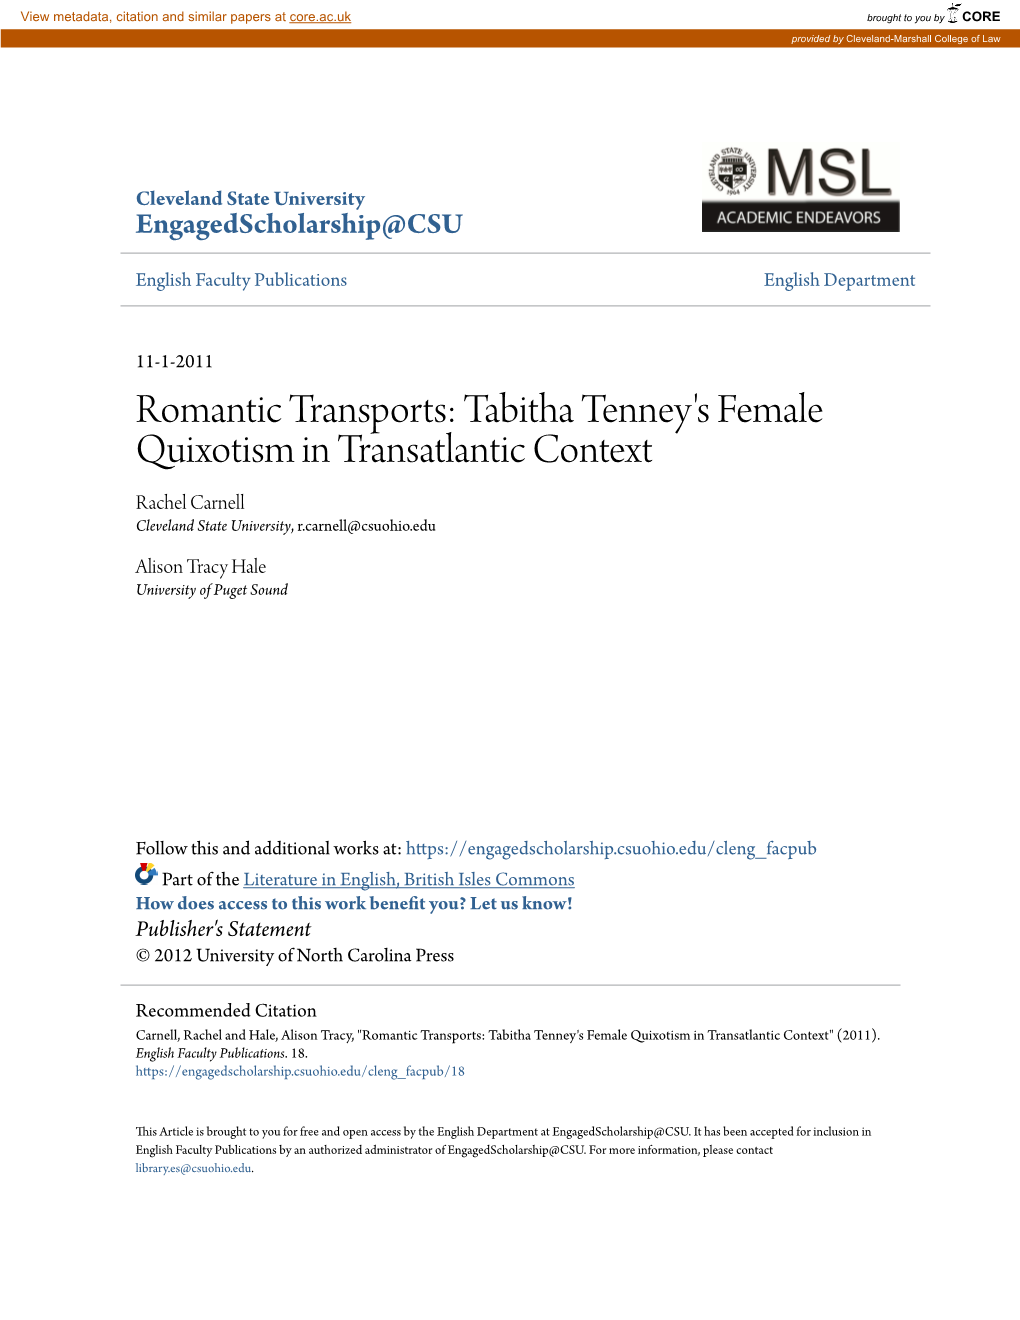 Tabitha Tenney's Female Quixotism in Transatlantic Context Rachel Carnell Cleveland State University, R.Carnell@Csuohio.Edu